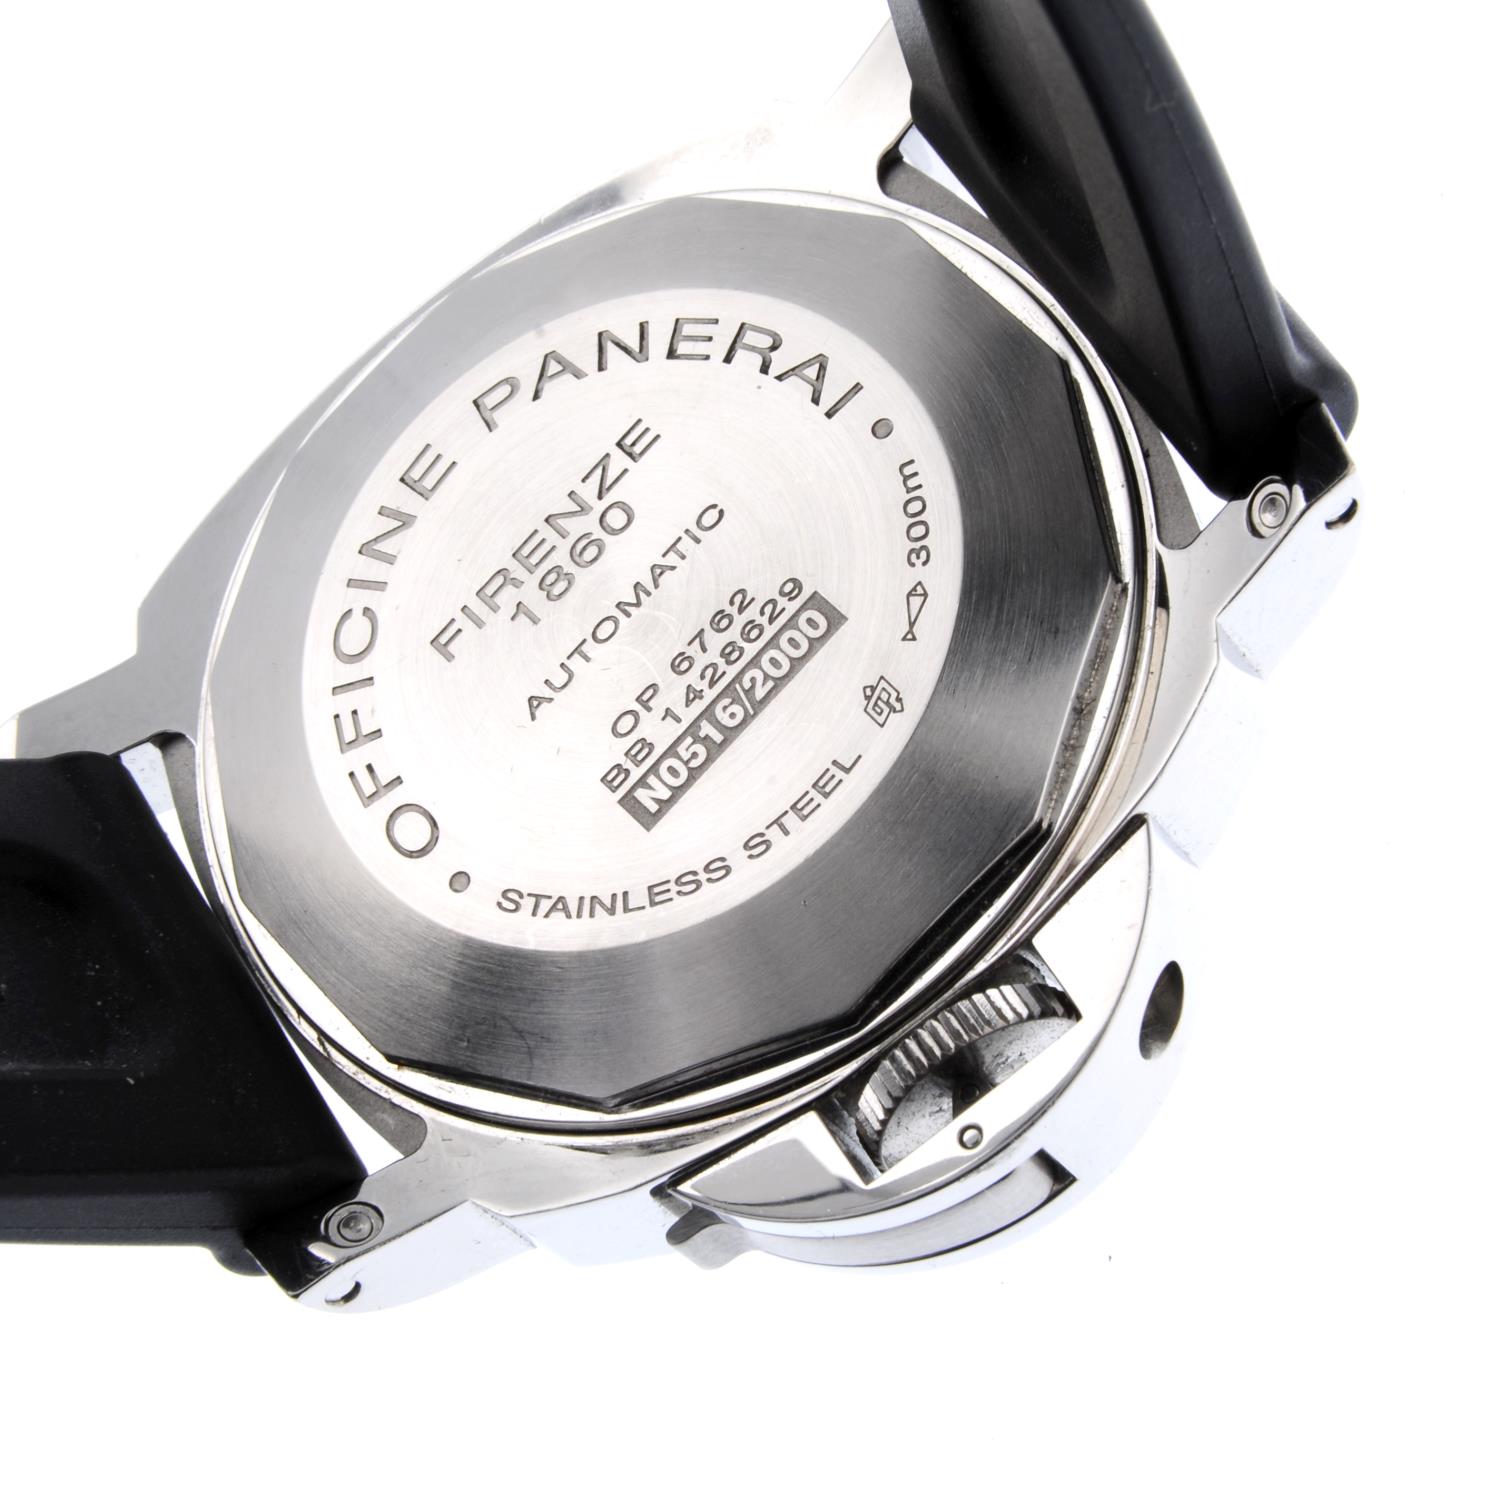 PANERAI - a gentleman's Luminor Power Reserve wrist watch. - Image 2 of 4